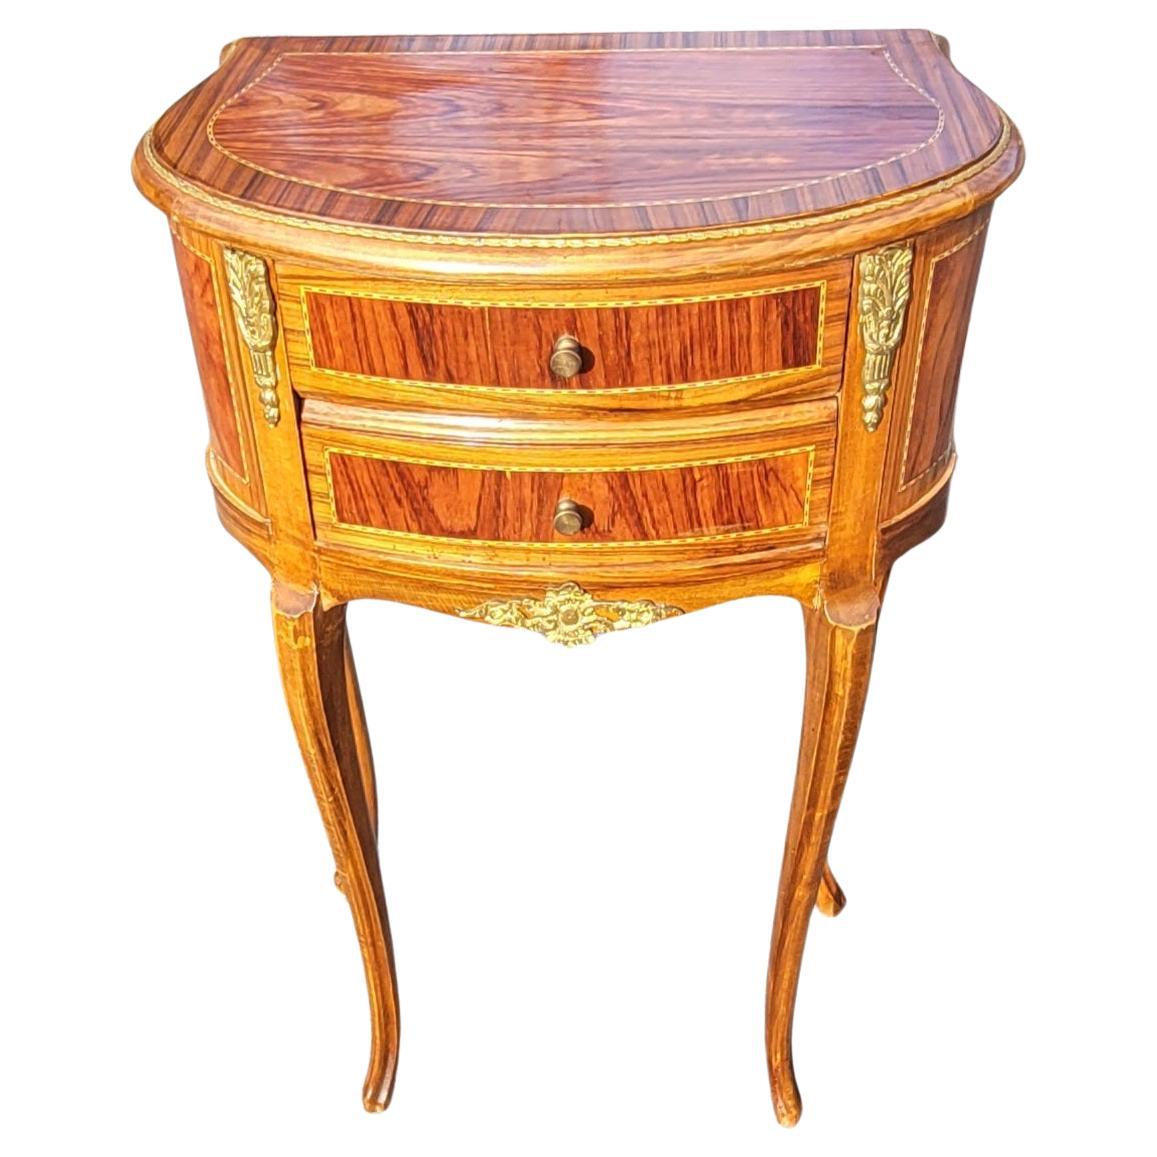 20th Century French Louis XV Walnut Kingwood Satinwood Inlaid Ormolu Side Table For Sale